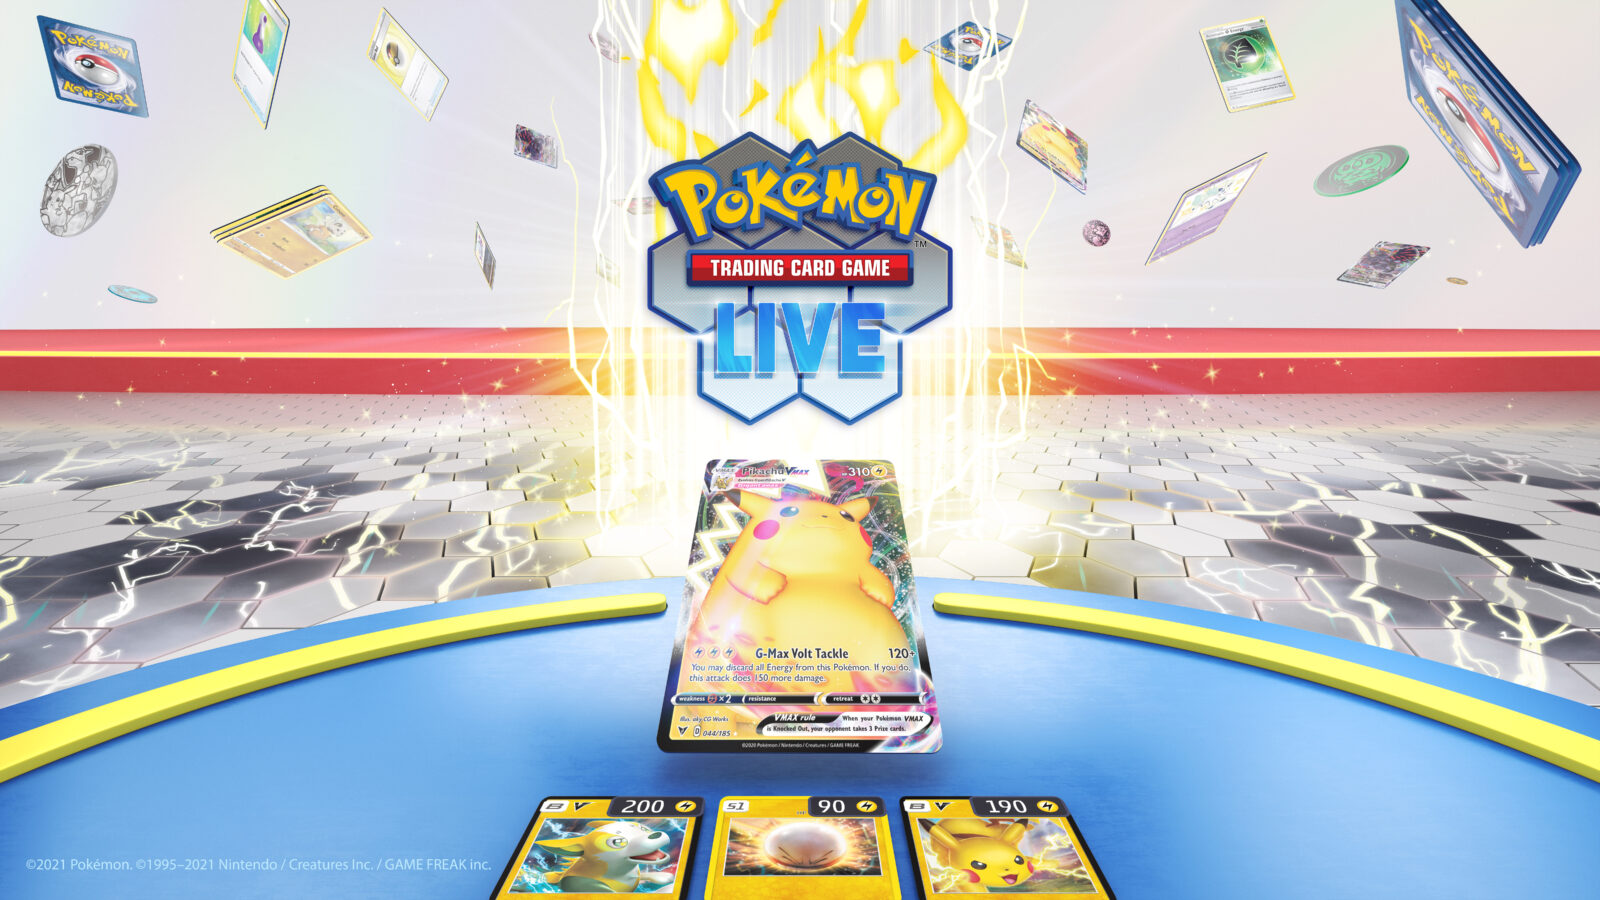 Pokemon Trading Card Game Live 2021 09 20 21 035 | Mobile | เหล่าเทรนเนอร์เตรียมตัวให้พร้อม เปิดตัว Pokemon Trading Card Game Live ลงบน PC, Mac และ Mobile